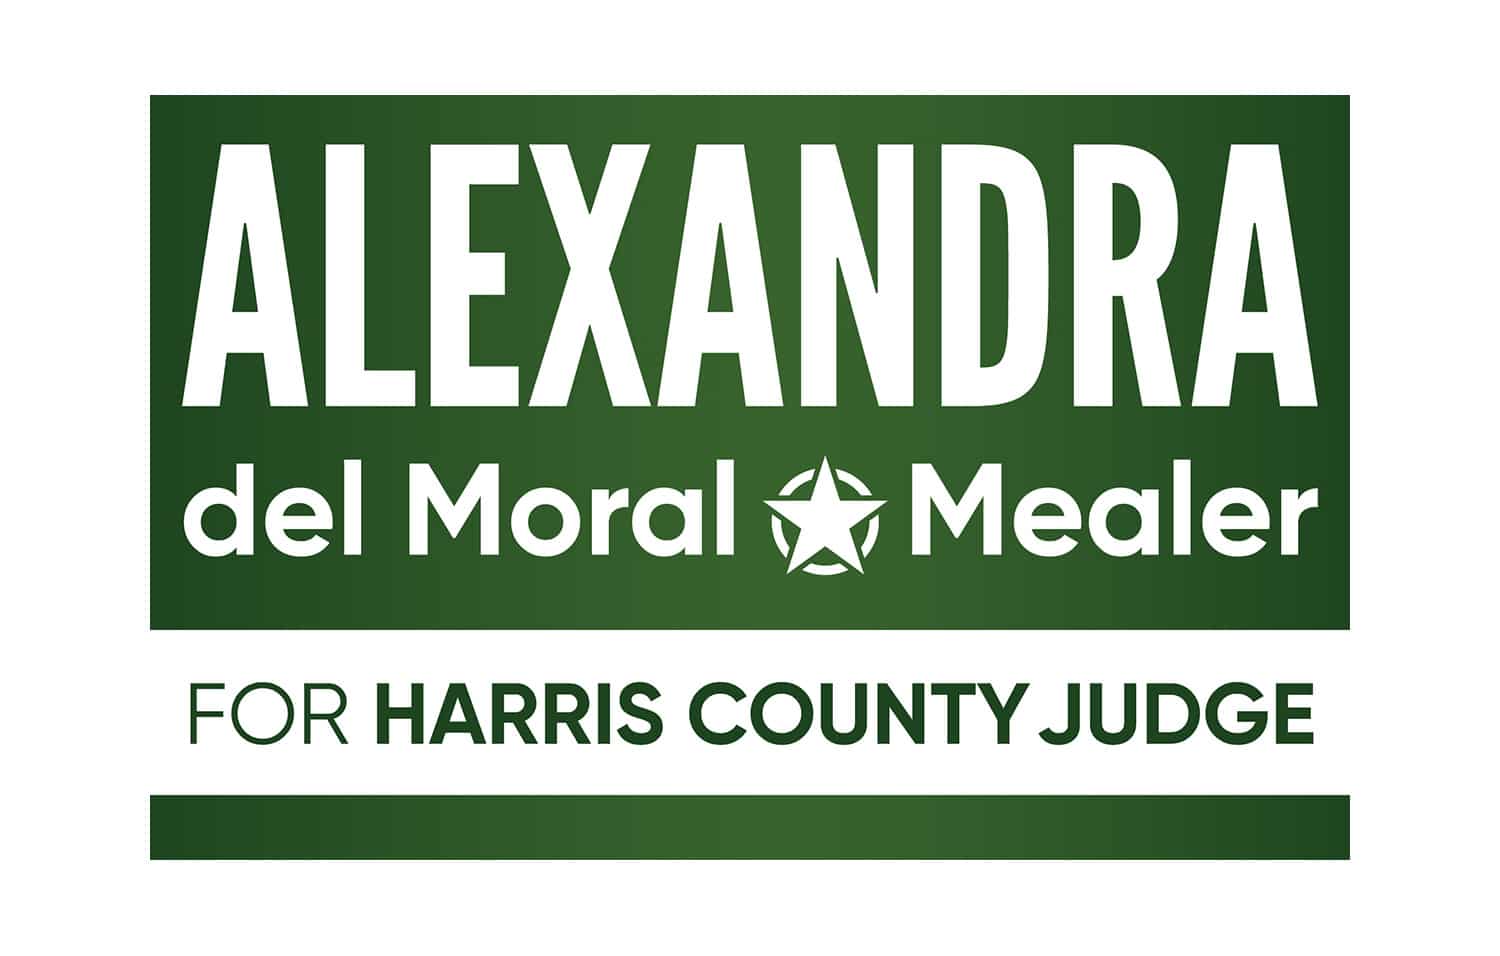 Alexandra del Moral Mealer For Harris County Judge